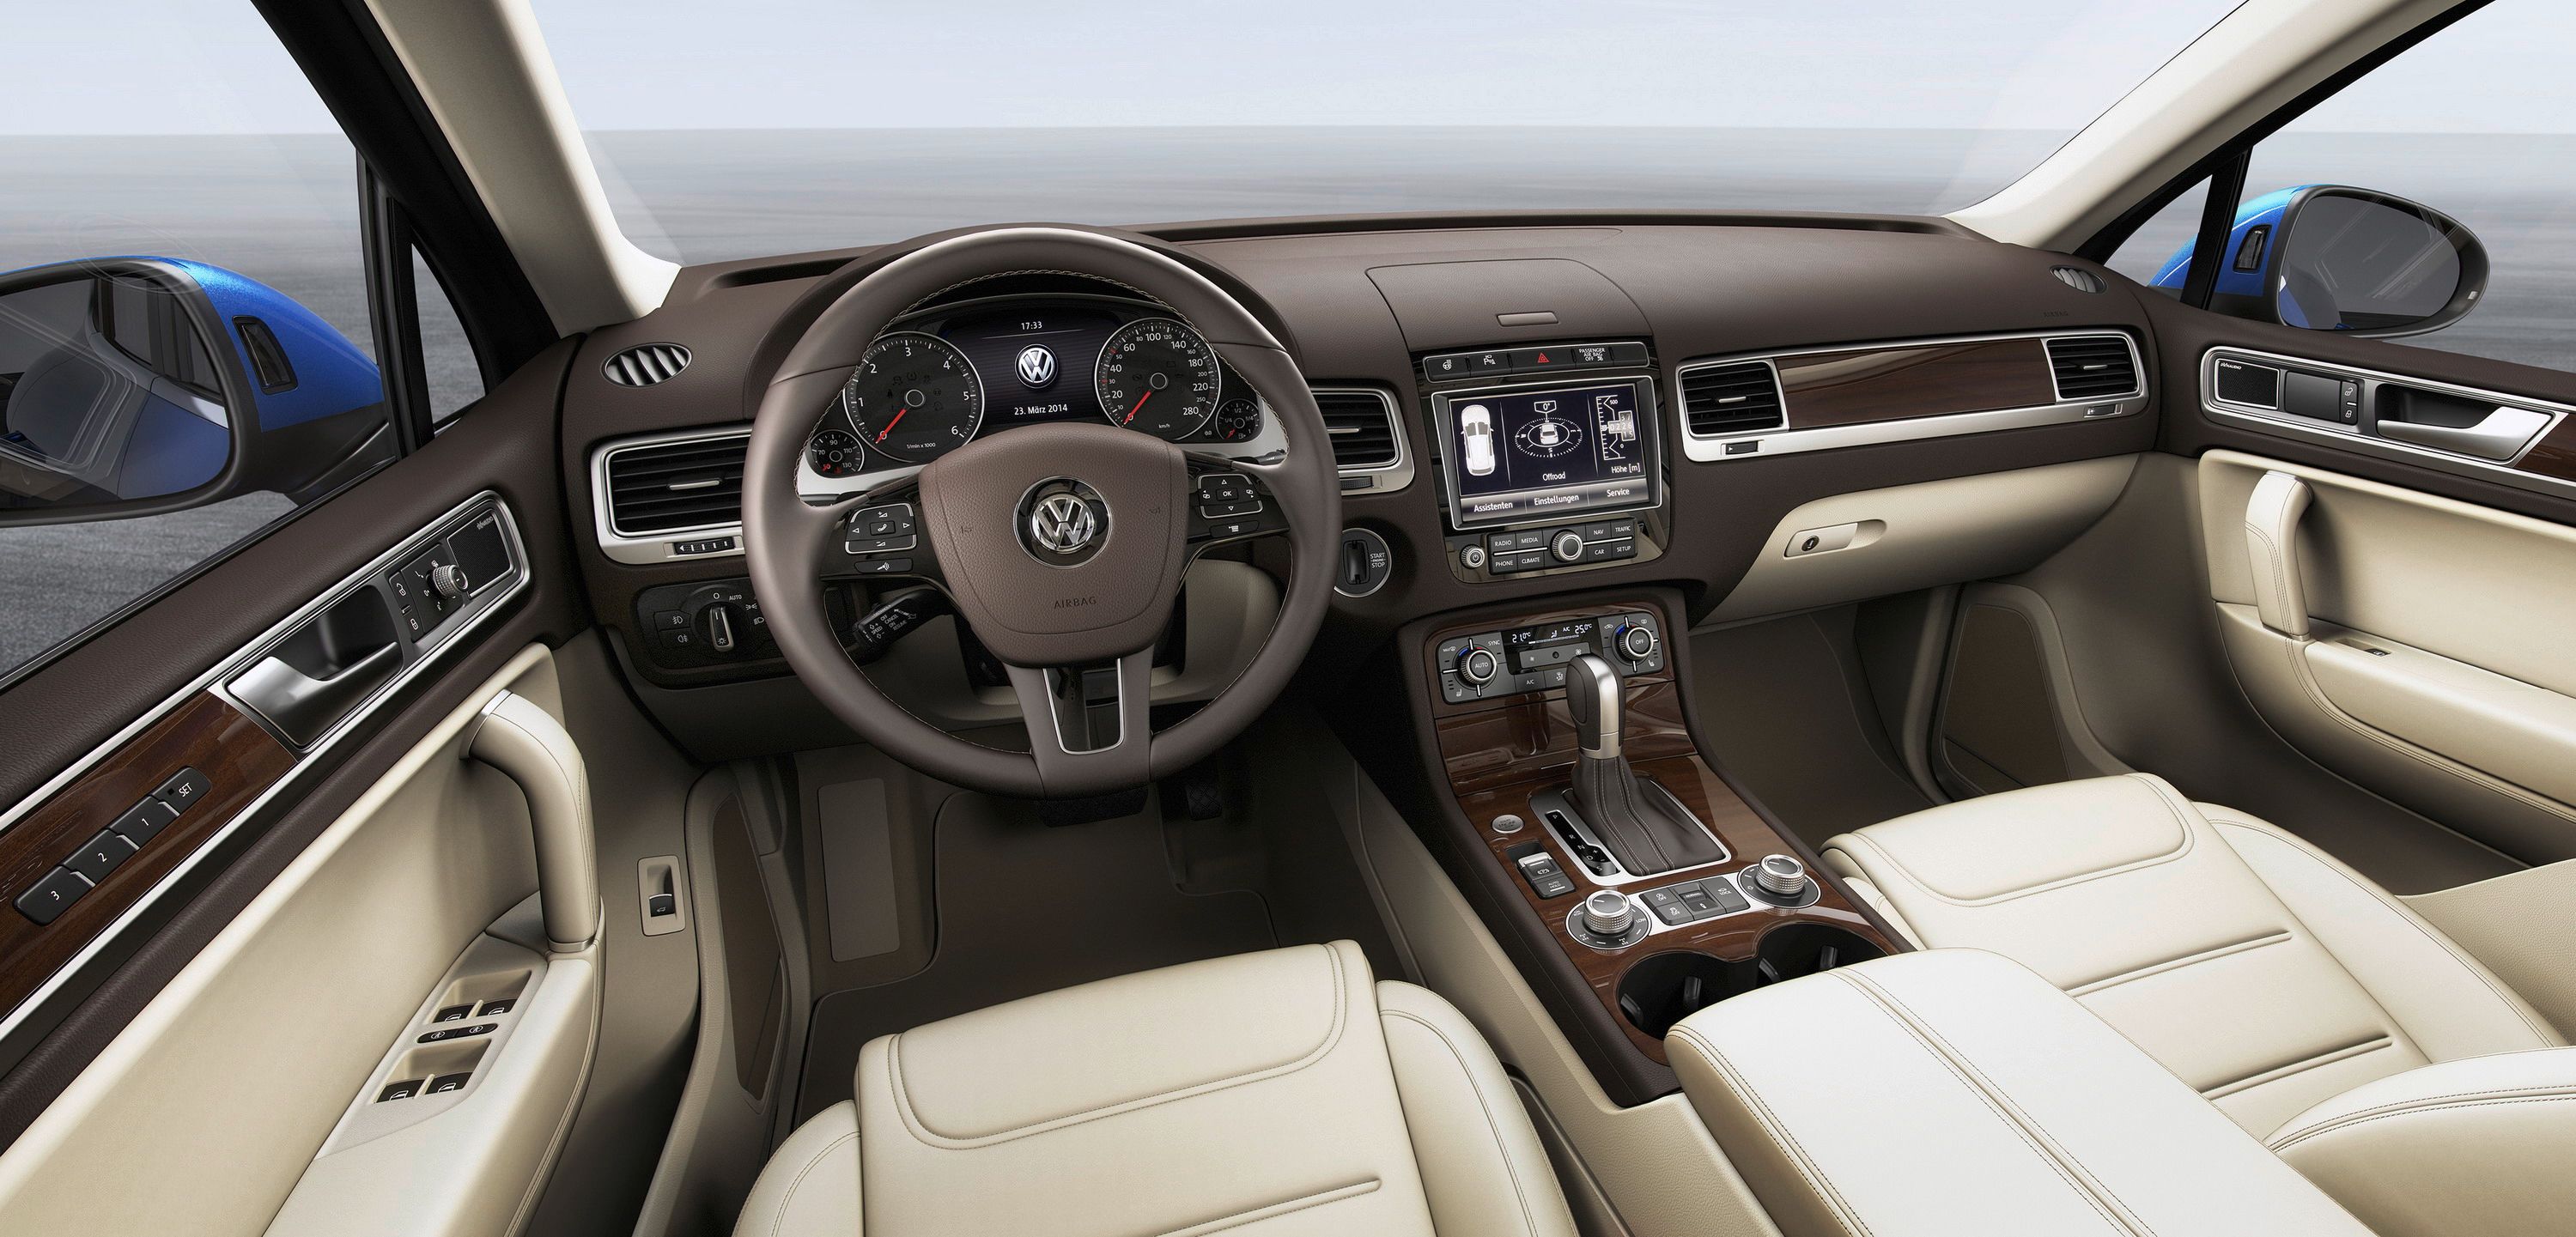 2015 - 2016 Volkswagen Touareg